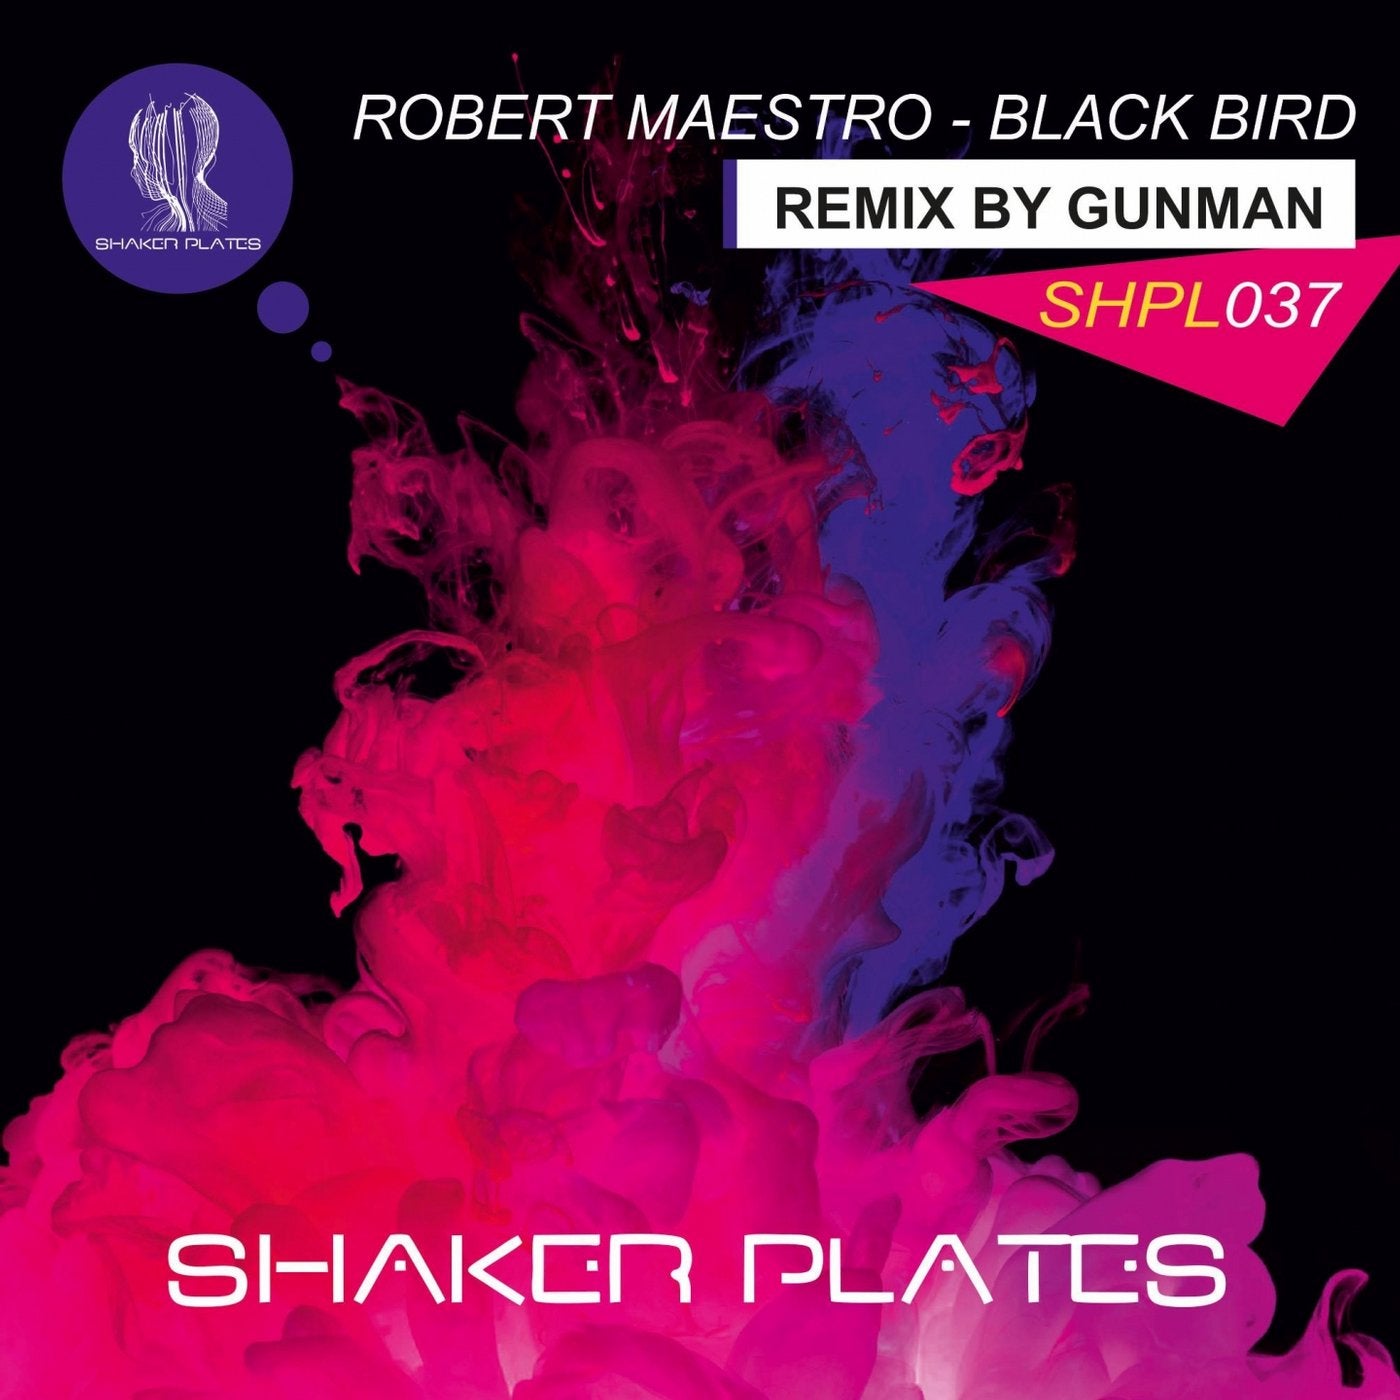 Bird remix. Maestro Black logo.